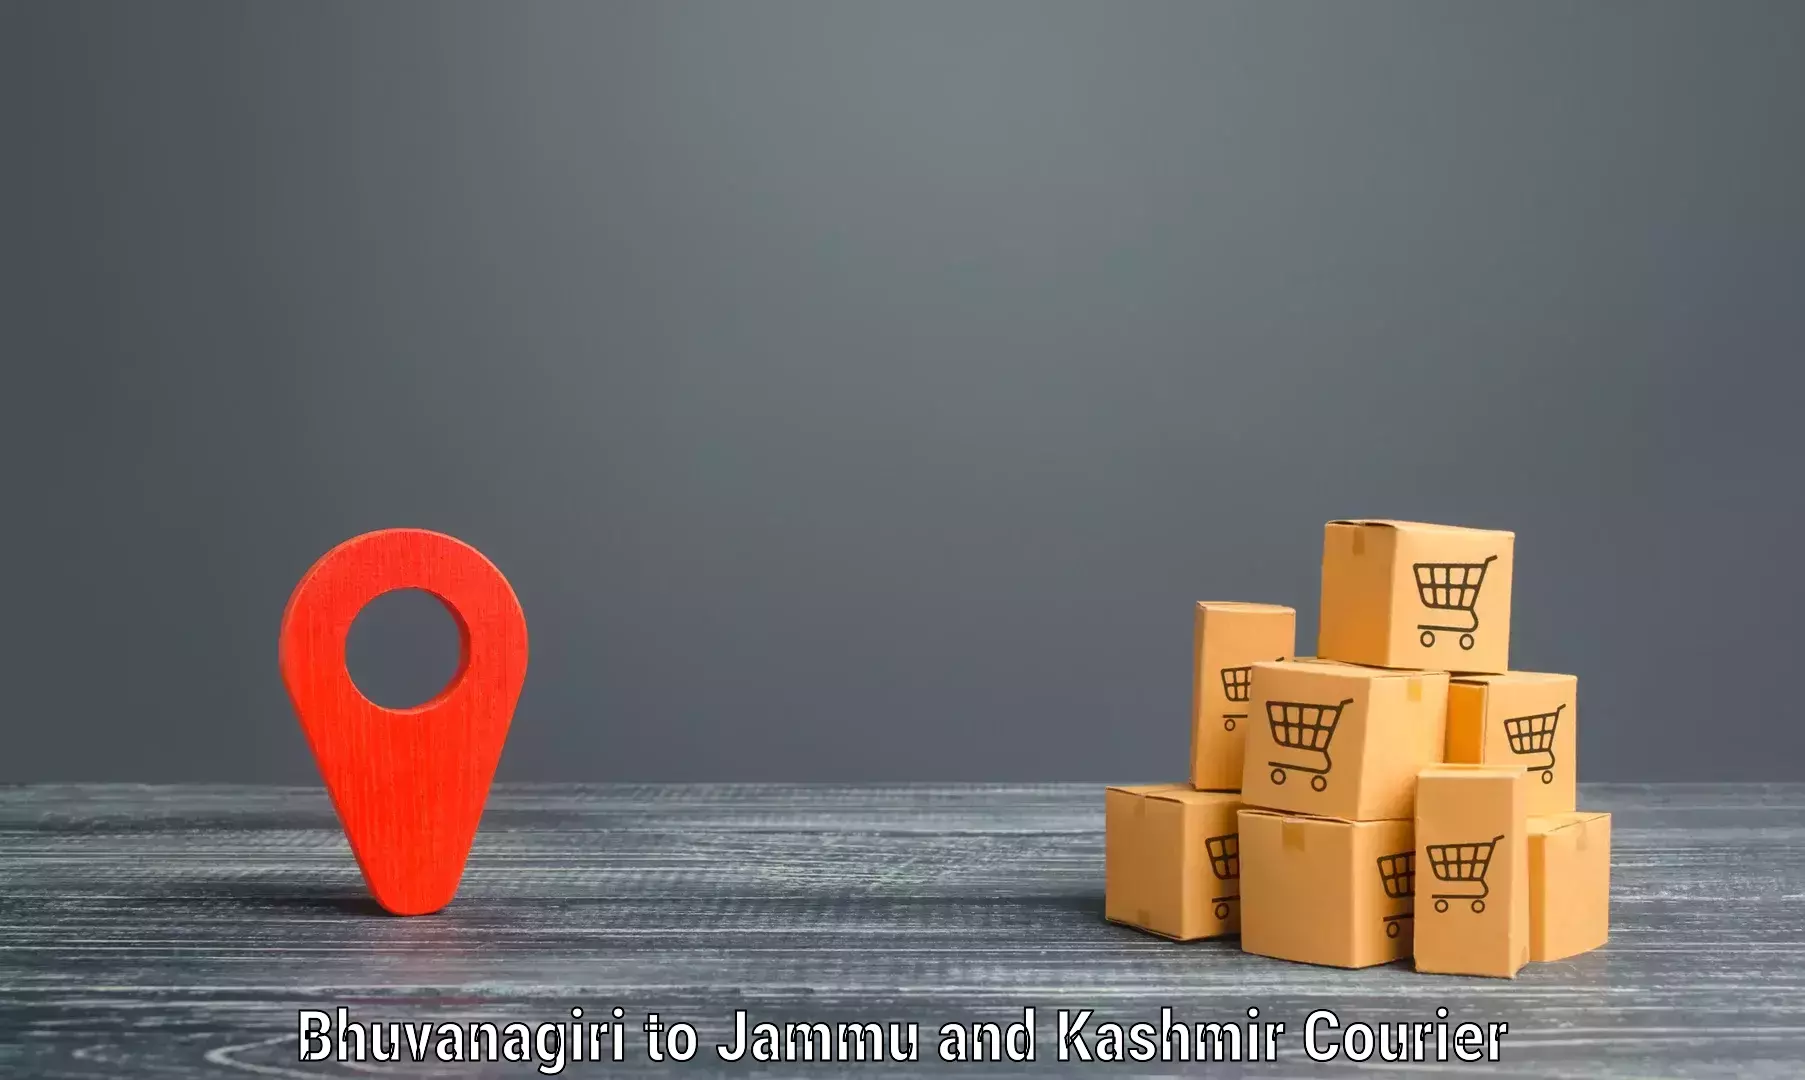 24/7 courier service Bhuvanagiri to Rajouri